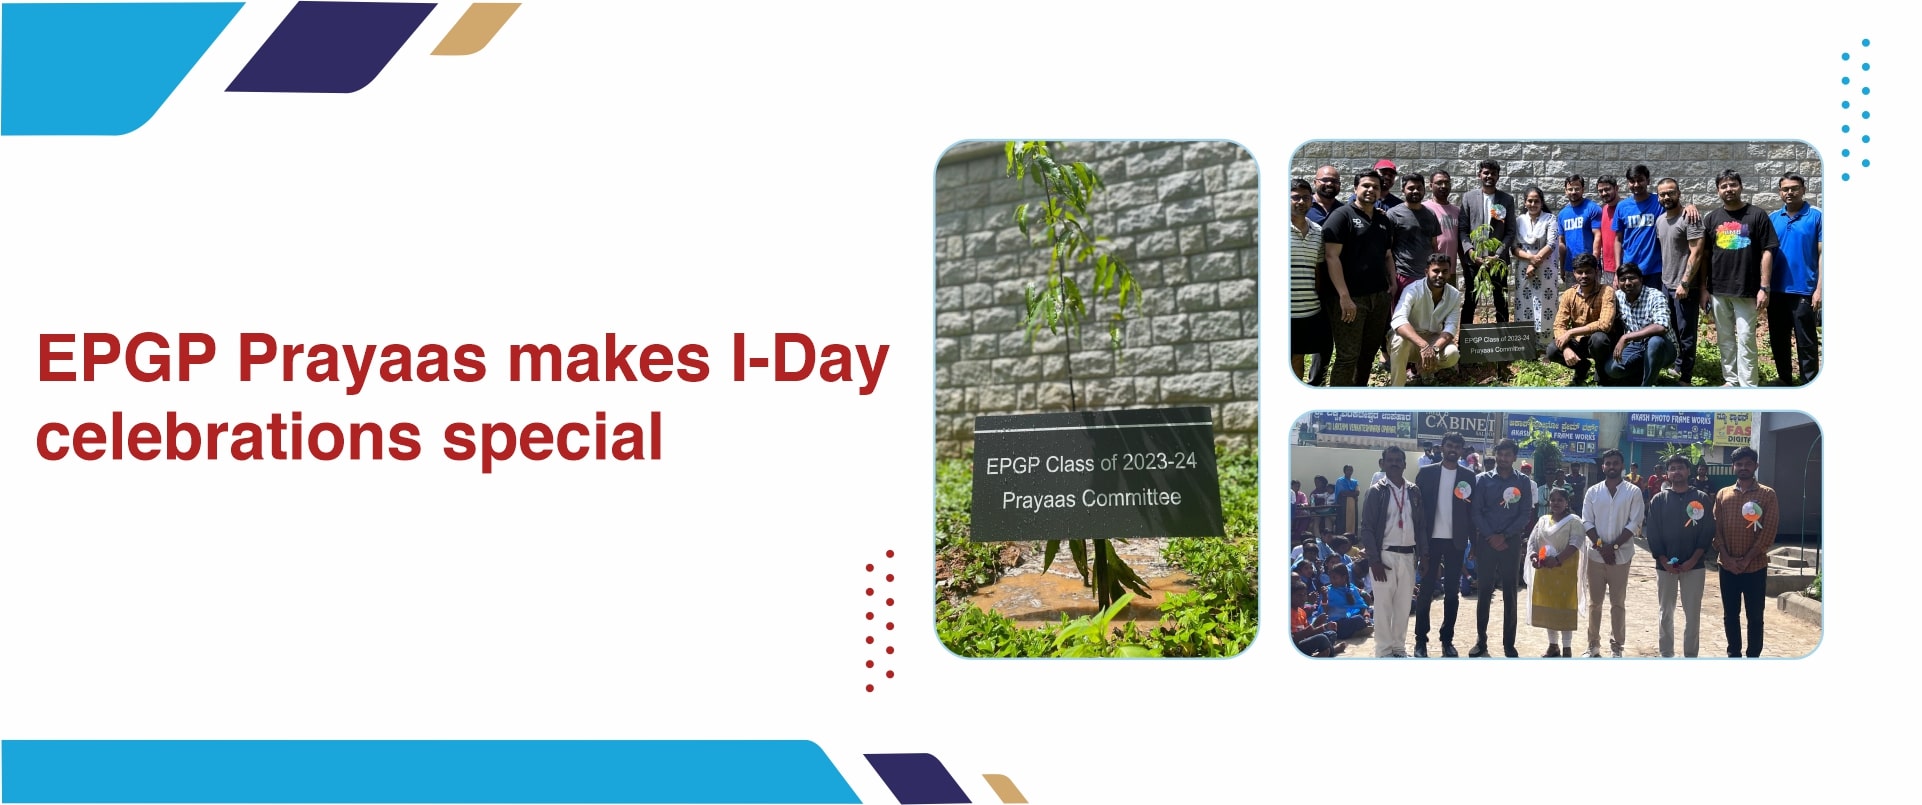 EPGP Prayaas makes I-Day celebrations special